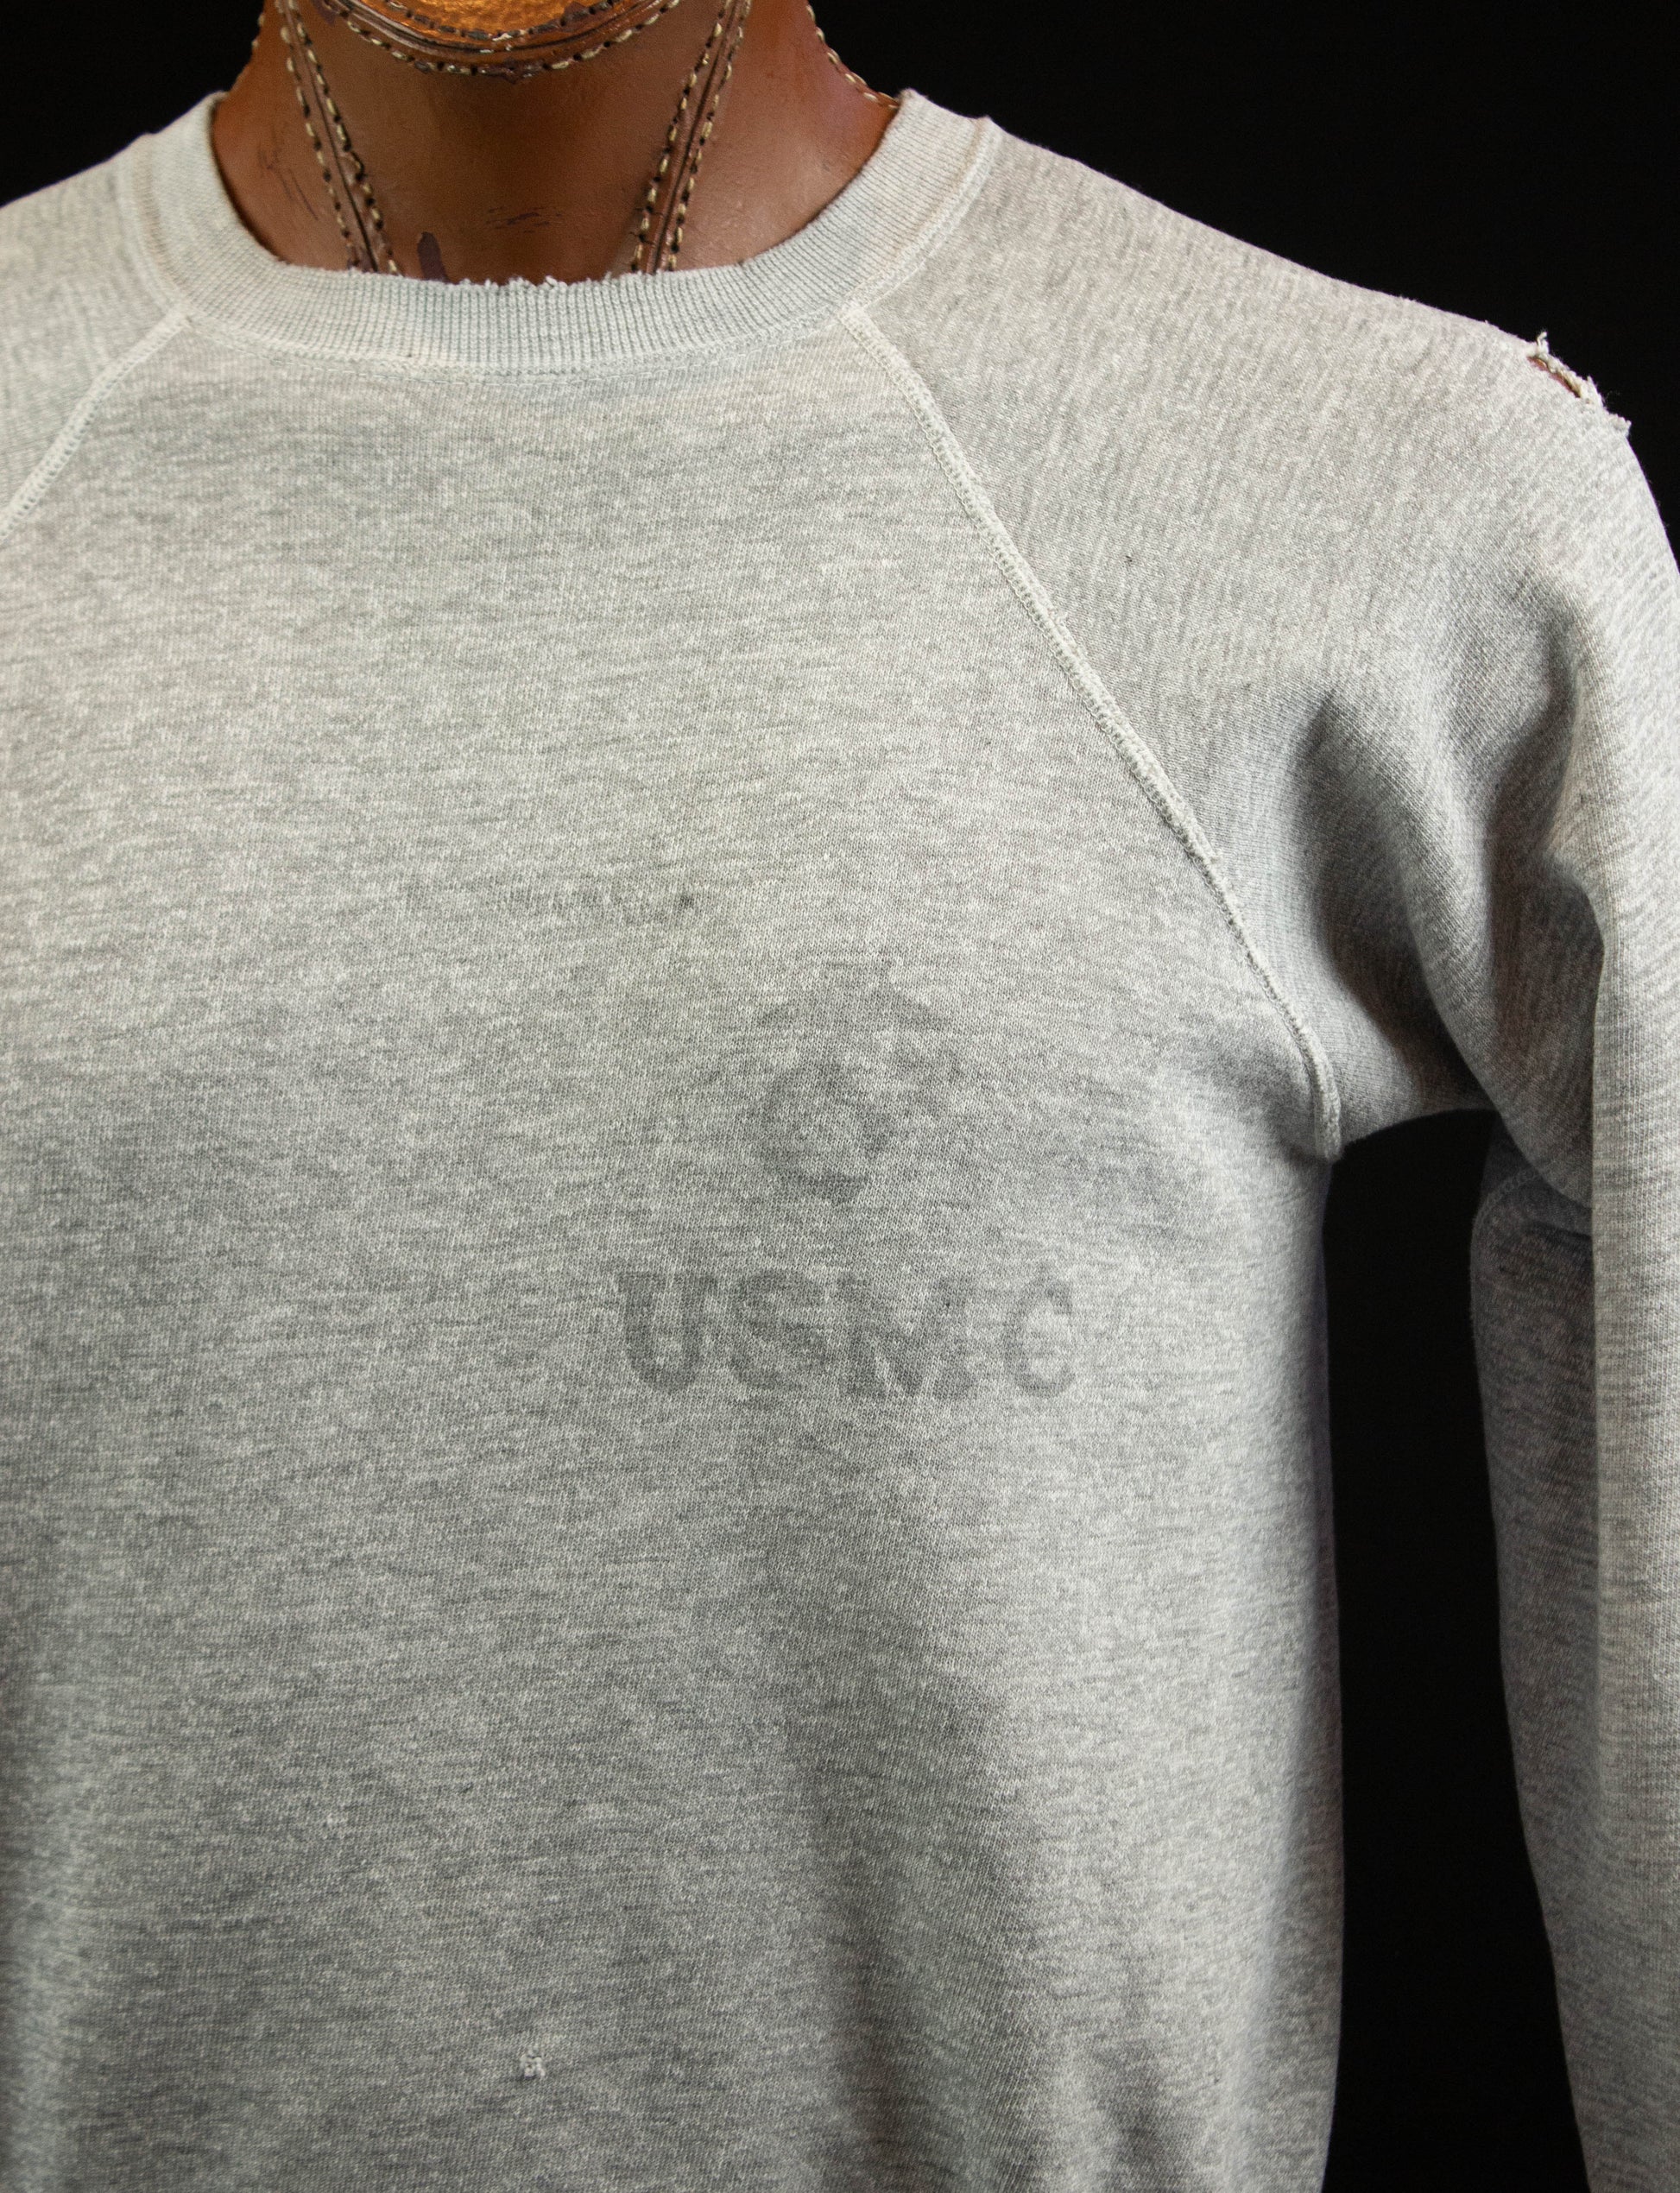 Vintage USMC Raglan Crewneck Sweatshirt 70s Mayo Spruce Heather Grey Small-Medium